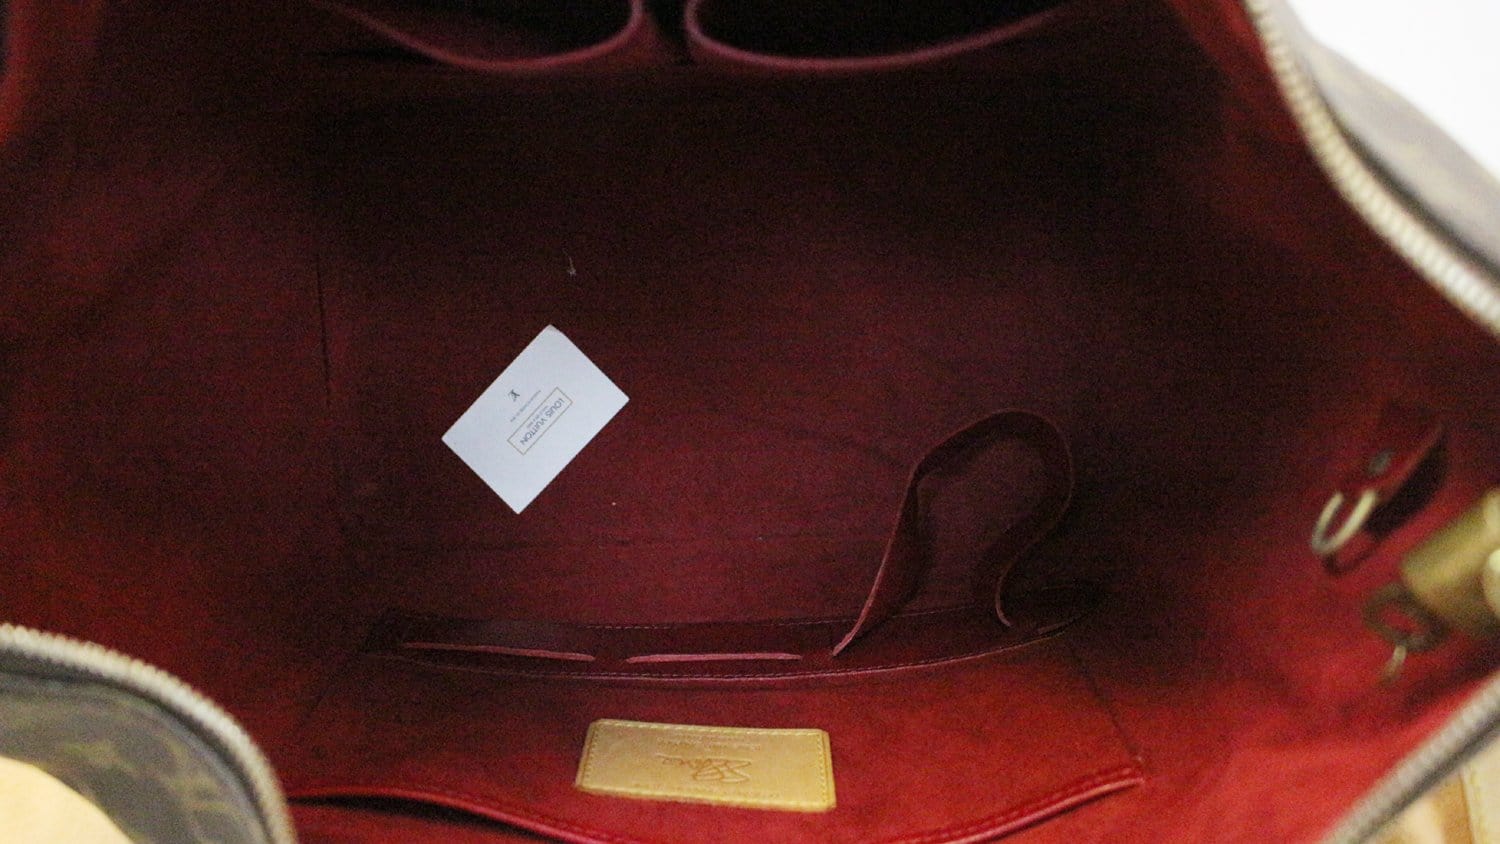 Sac bandoulière en pierre Louis Vuitton monogramme Amfar Three par Sharon